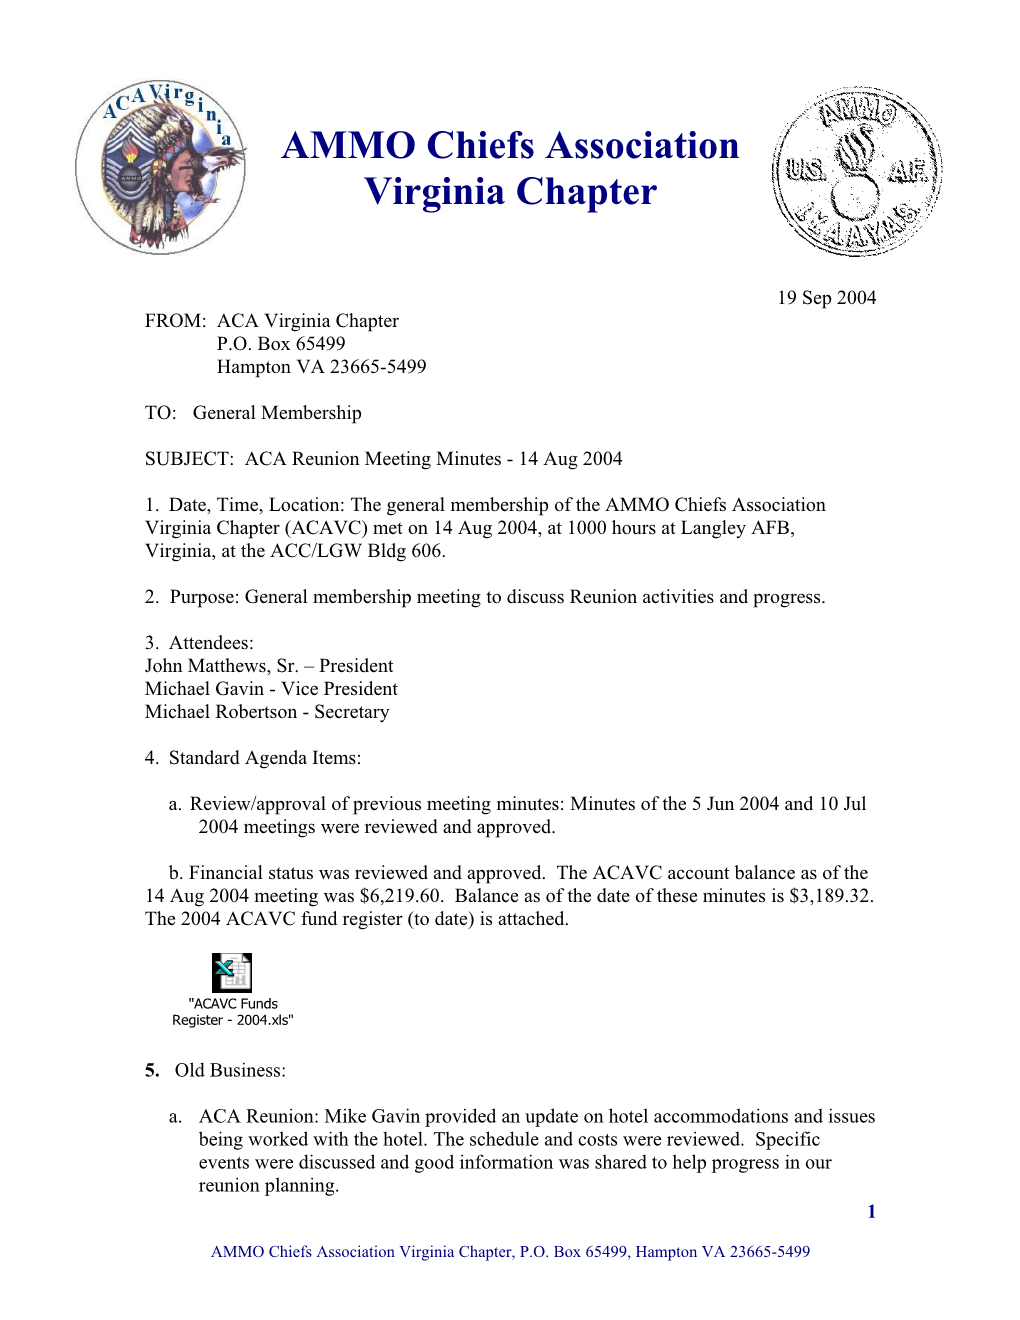 Virginia Chapter